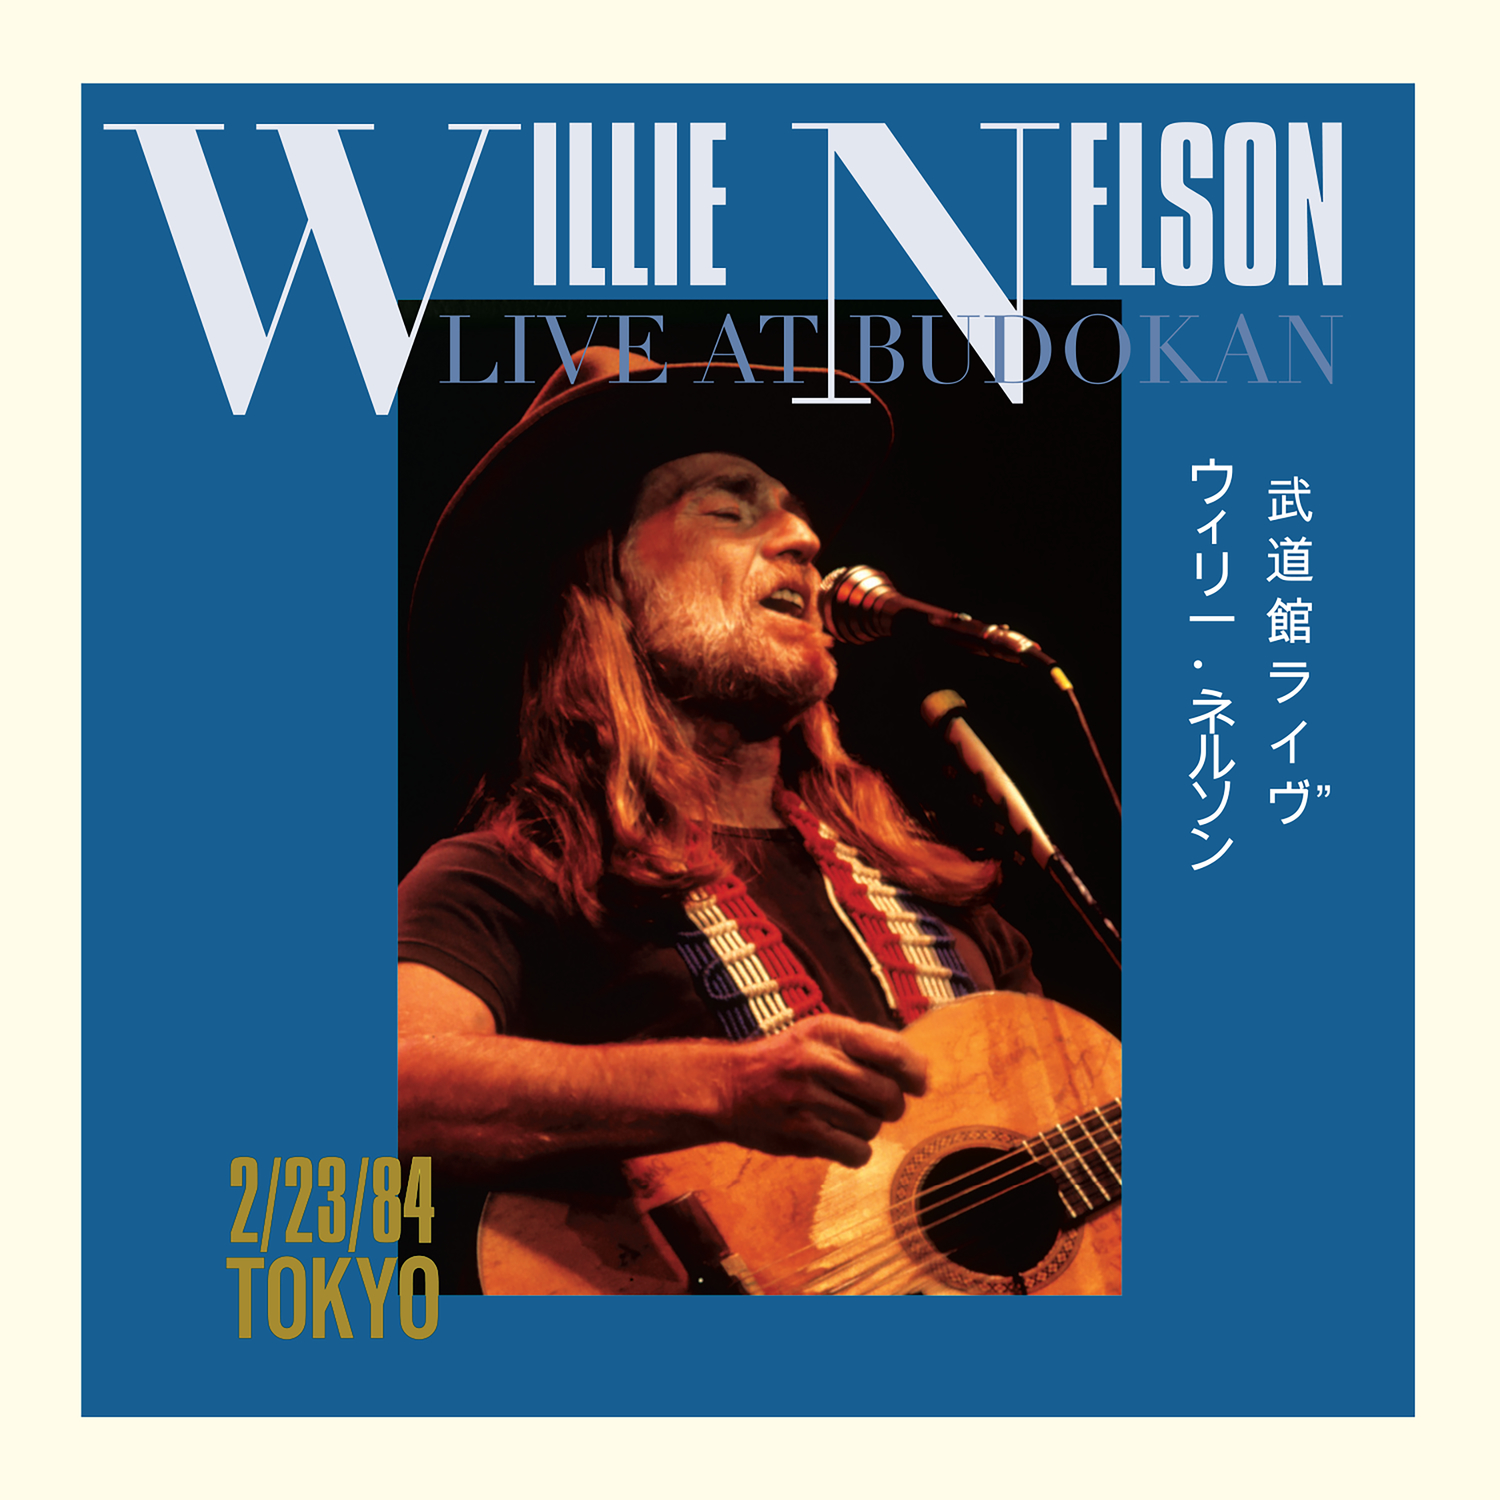 NELSON WILLIE - Live At Budokan: 2/23/84 Tokyo